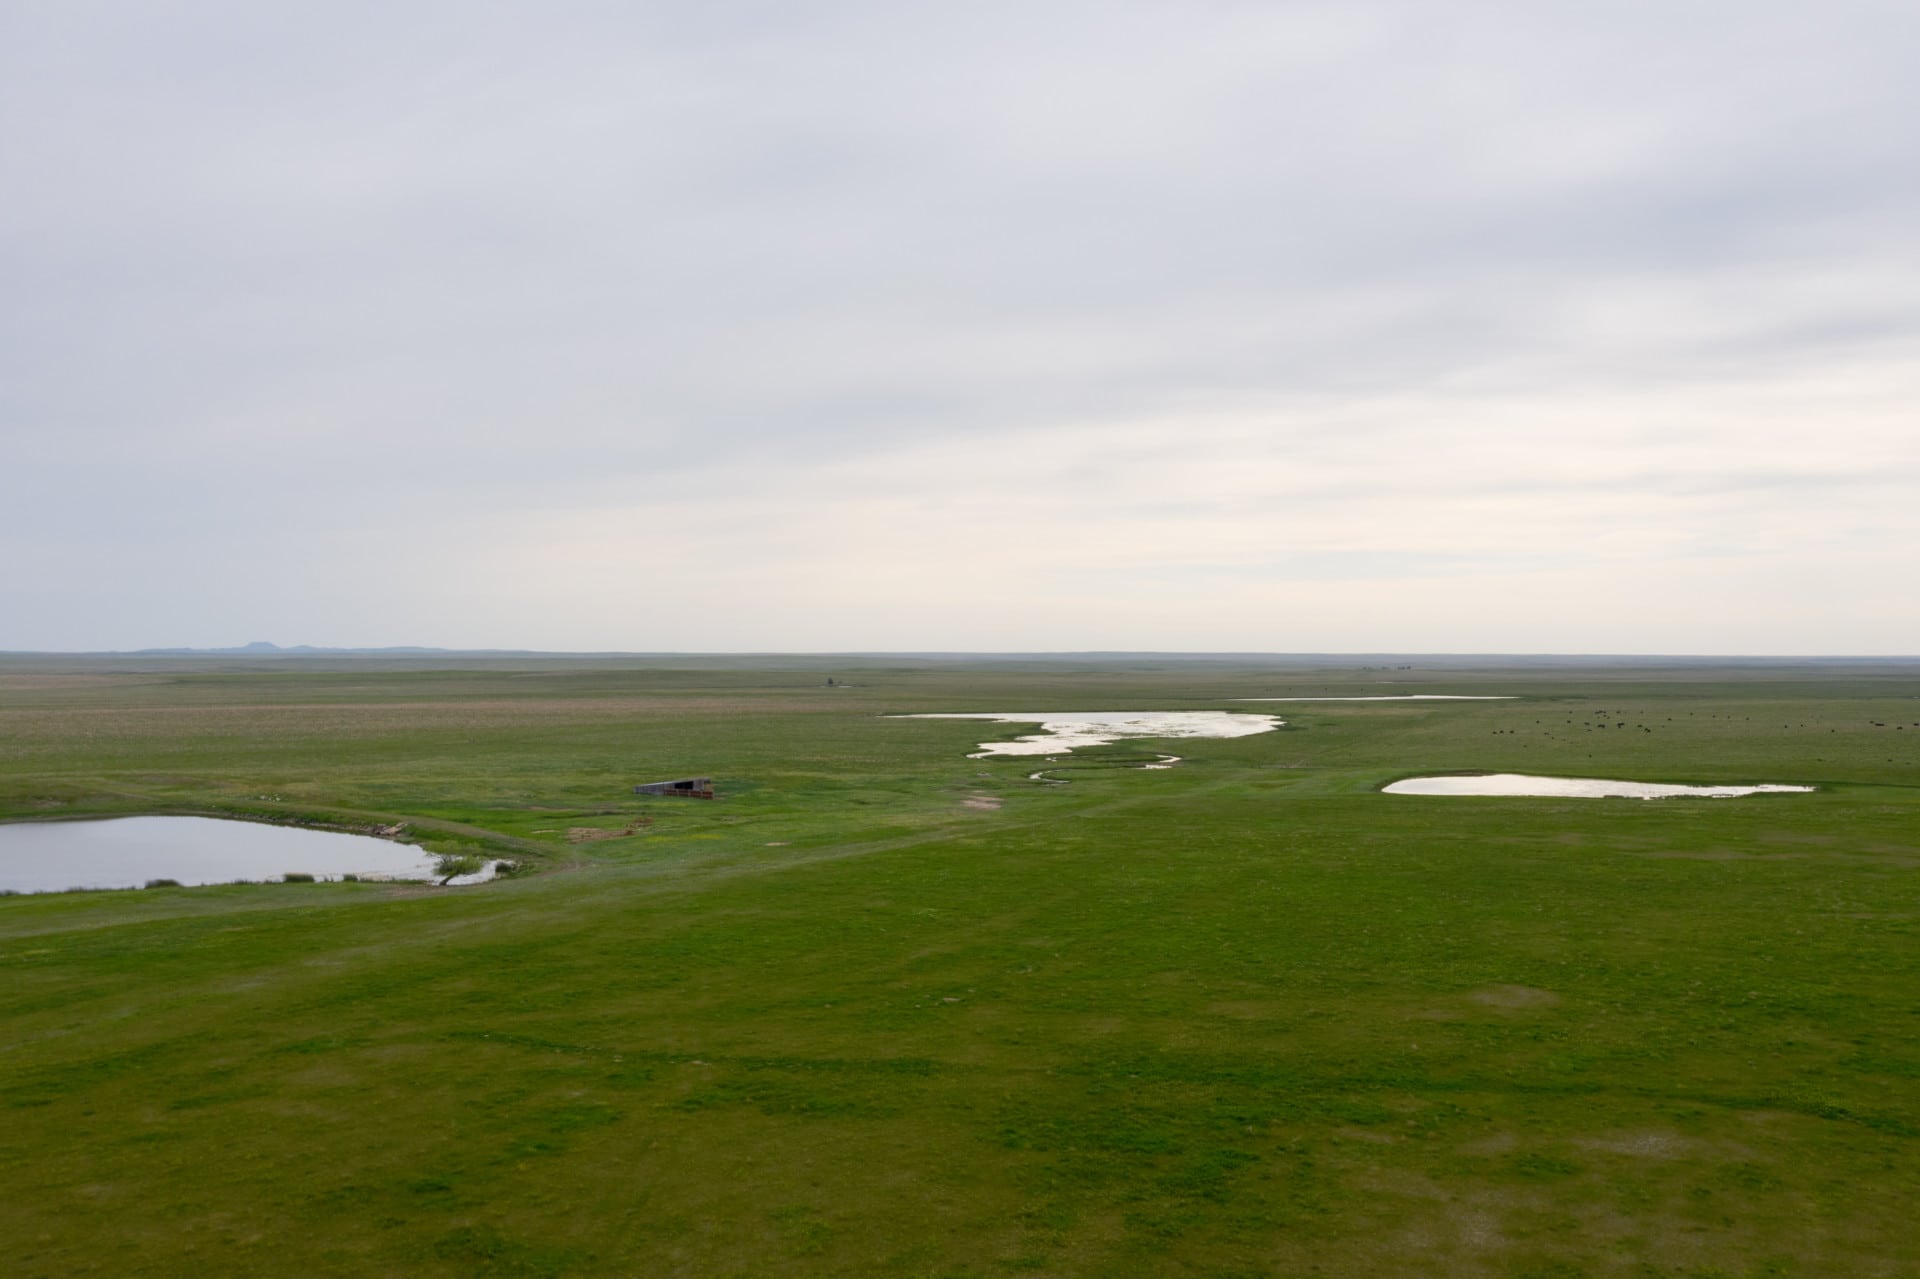 water sources south dakota northern plains grassland cattle ranch